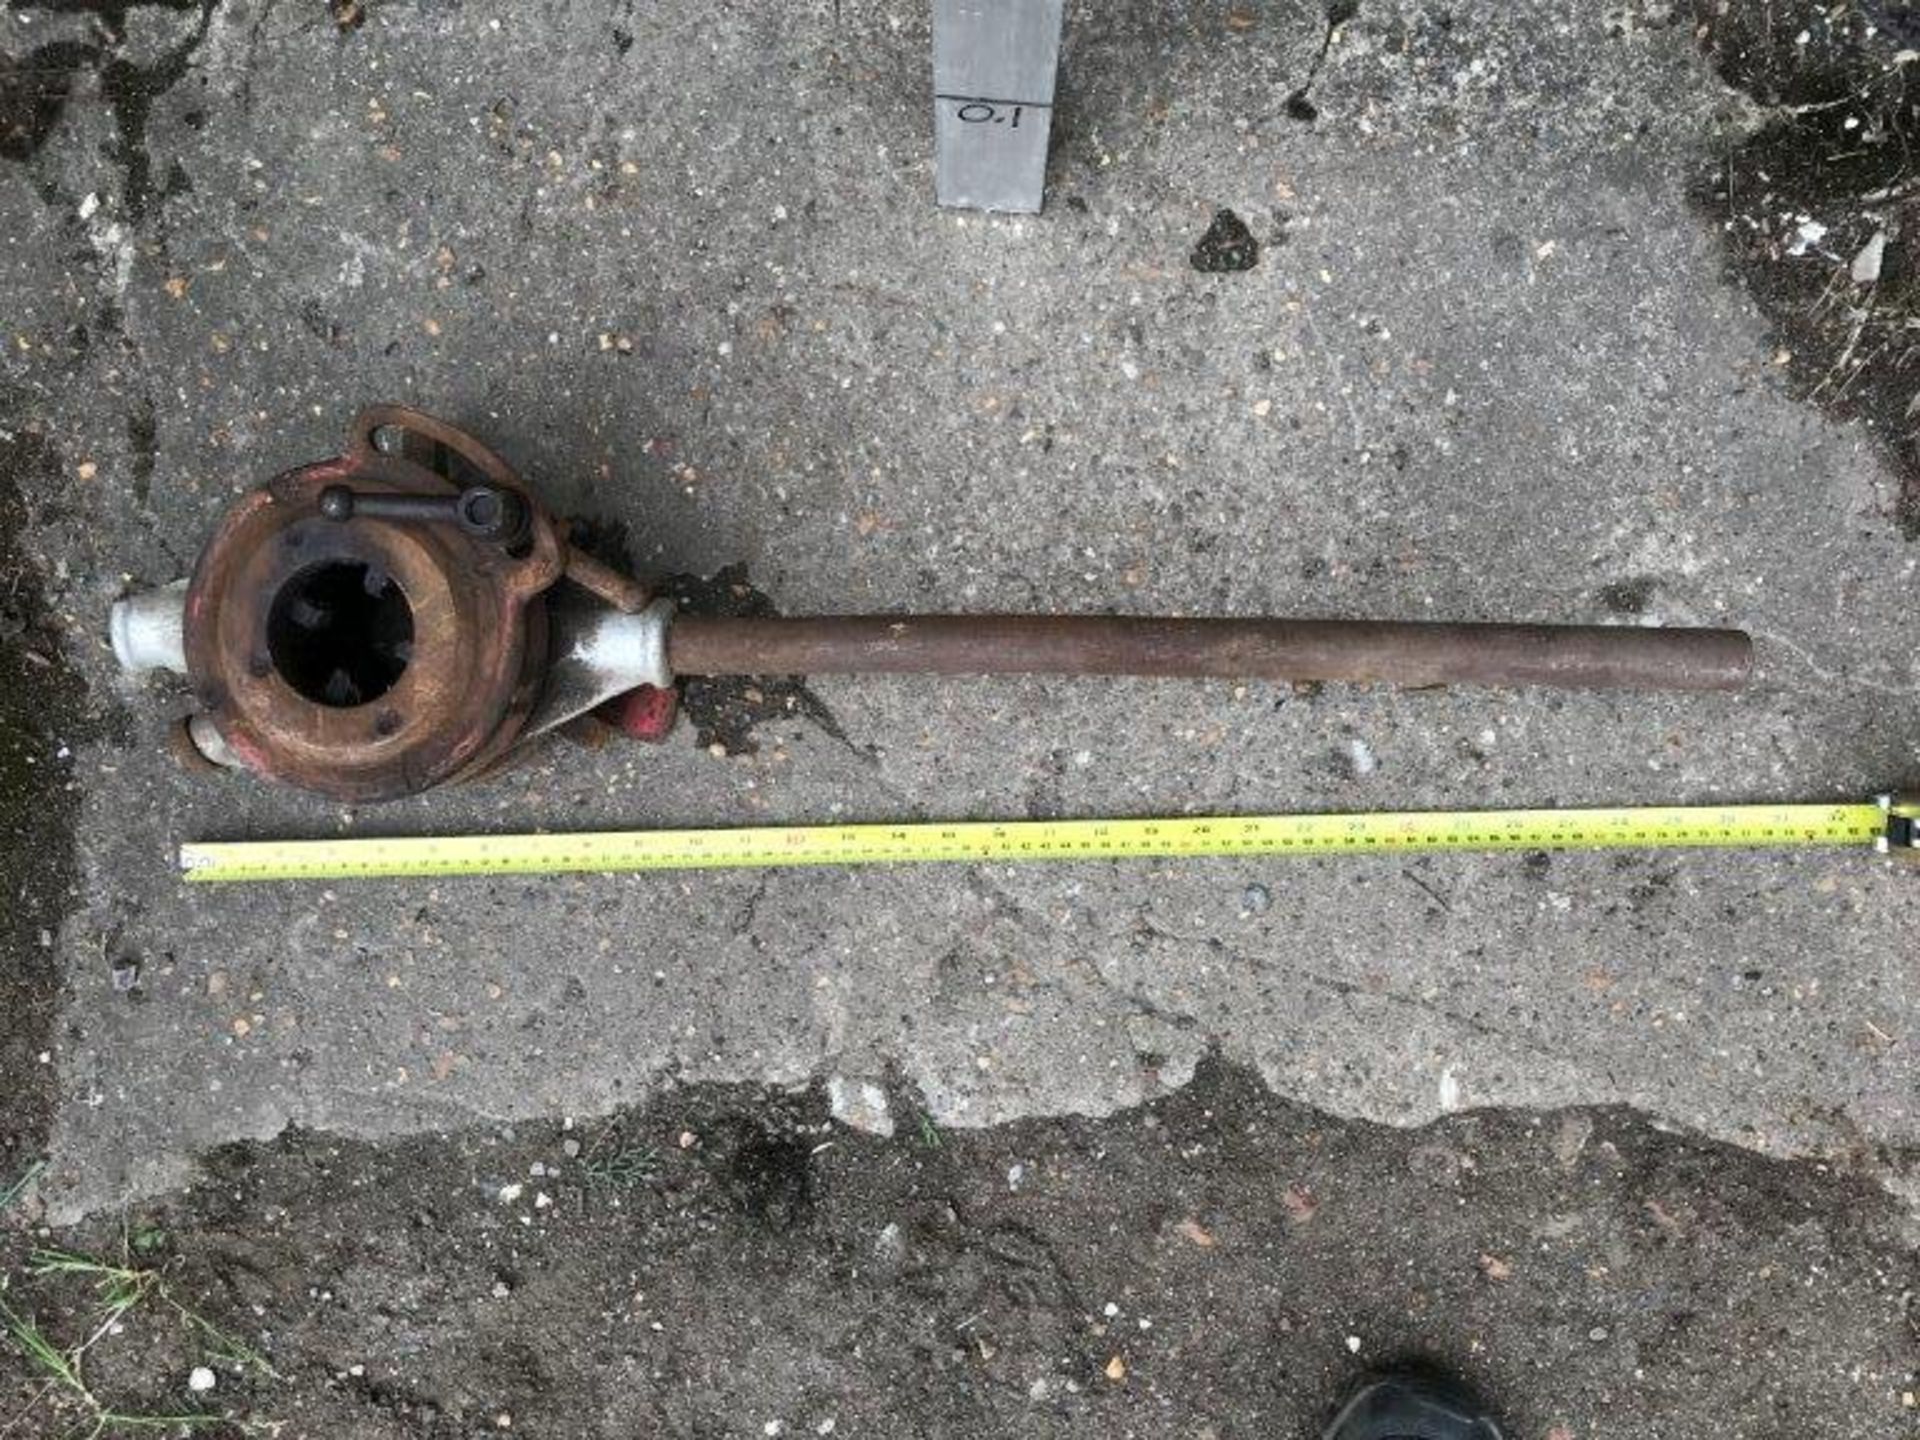 2 large Industrial Die's for threading metal pipes - vintage - Image 2 of 4